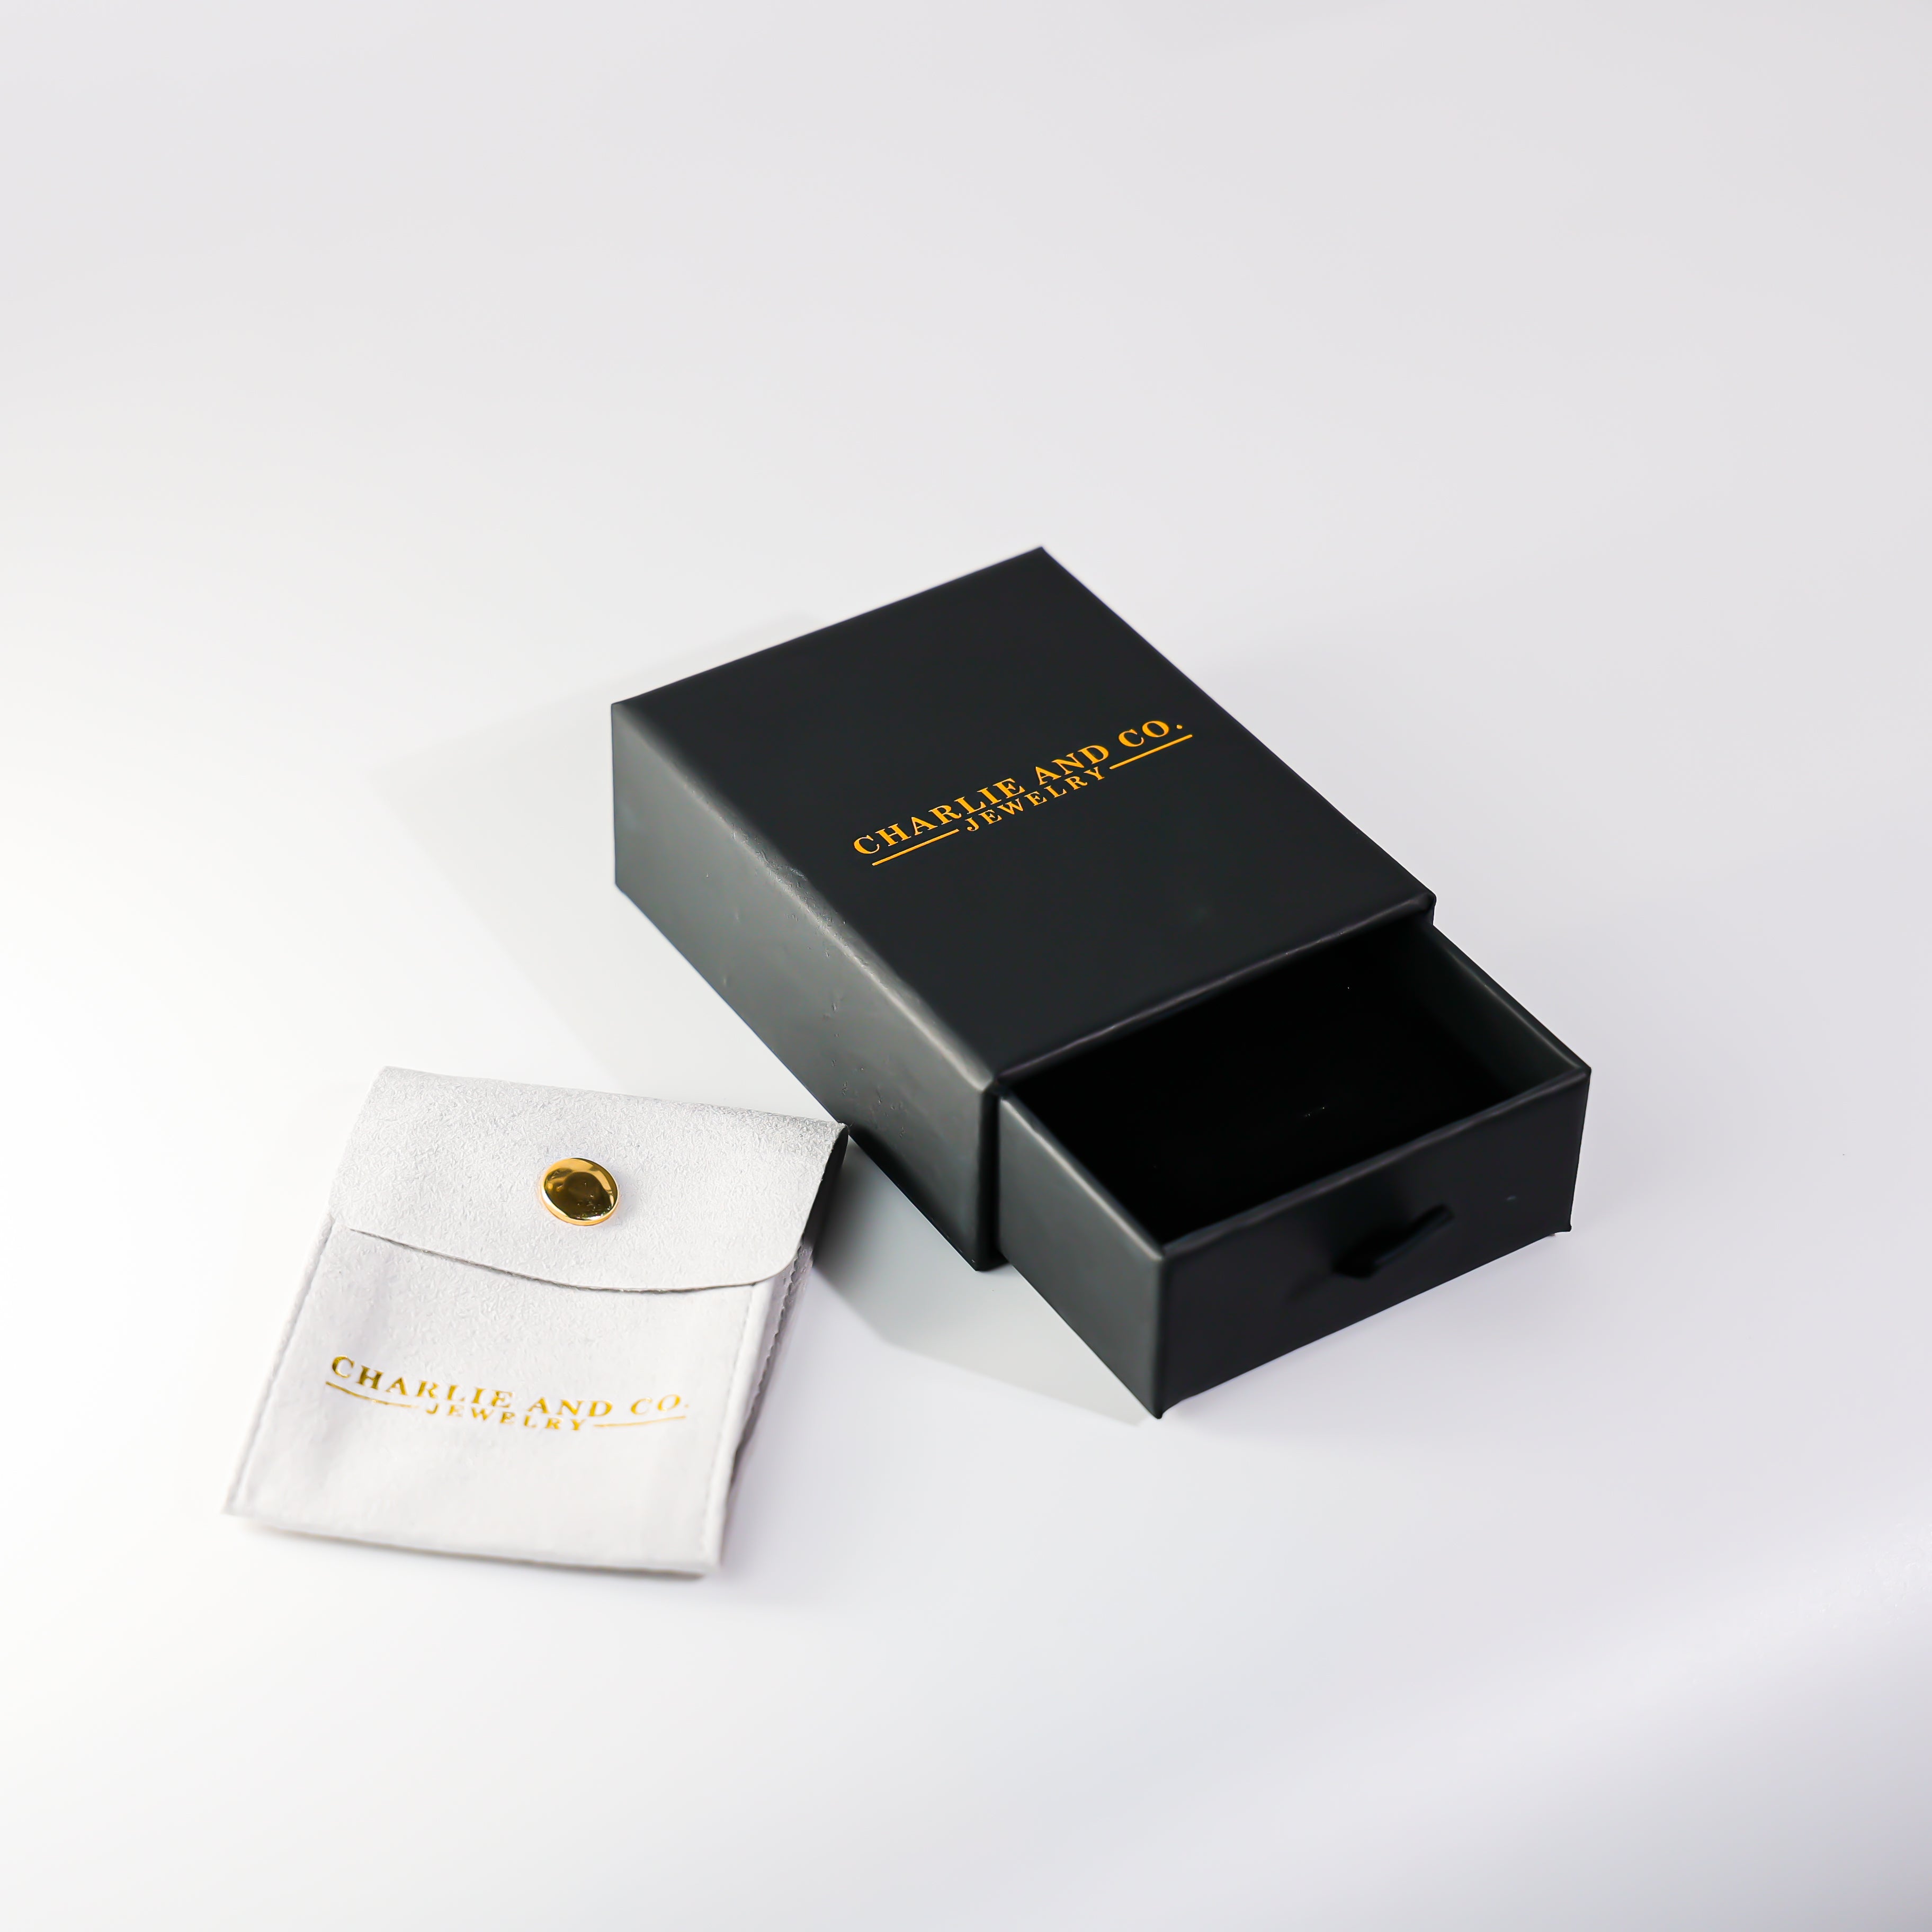 14K Gold 3D Mini Penny in Glass Bottle Pendant - Charlie & Co. Jewelry